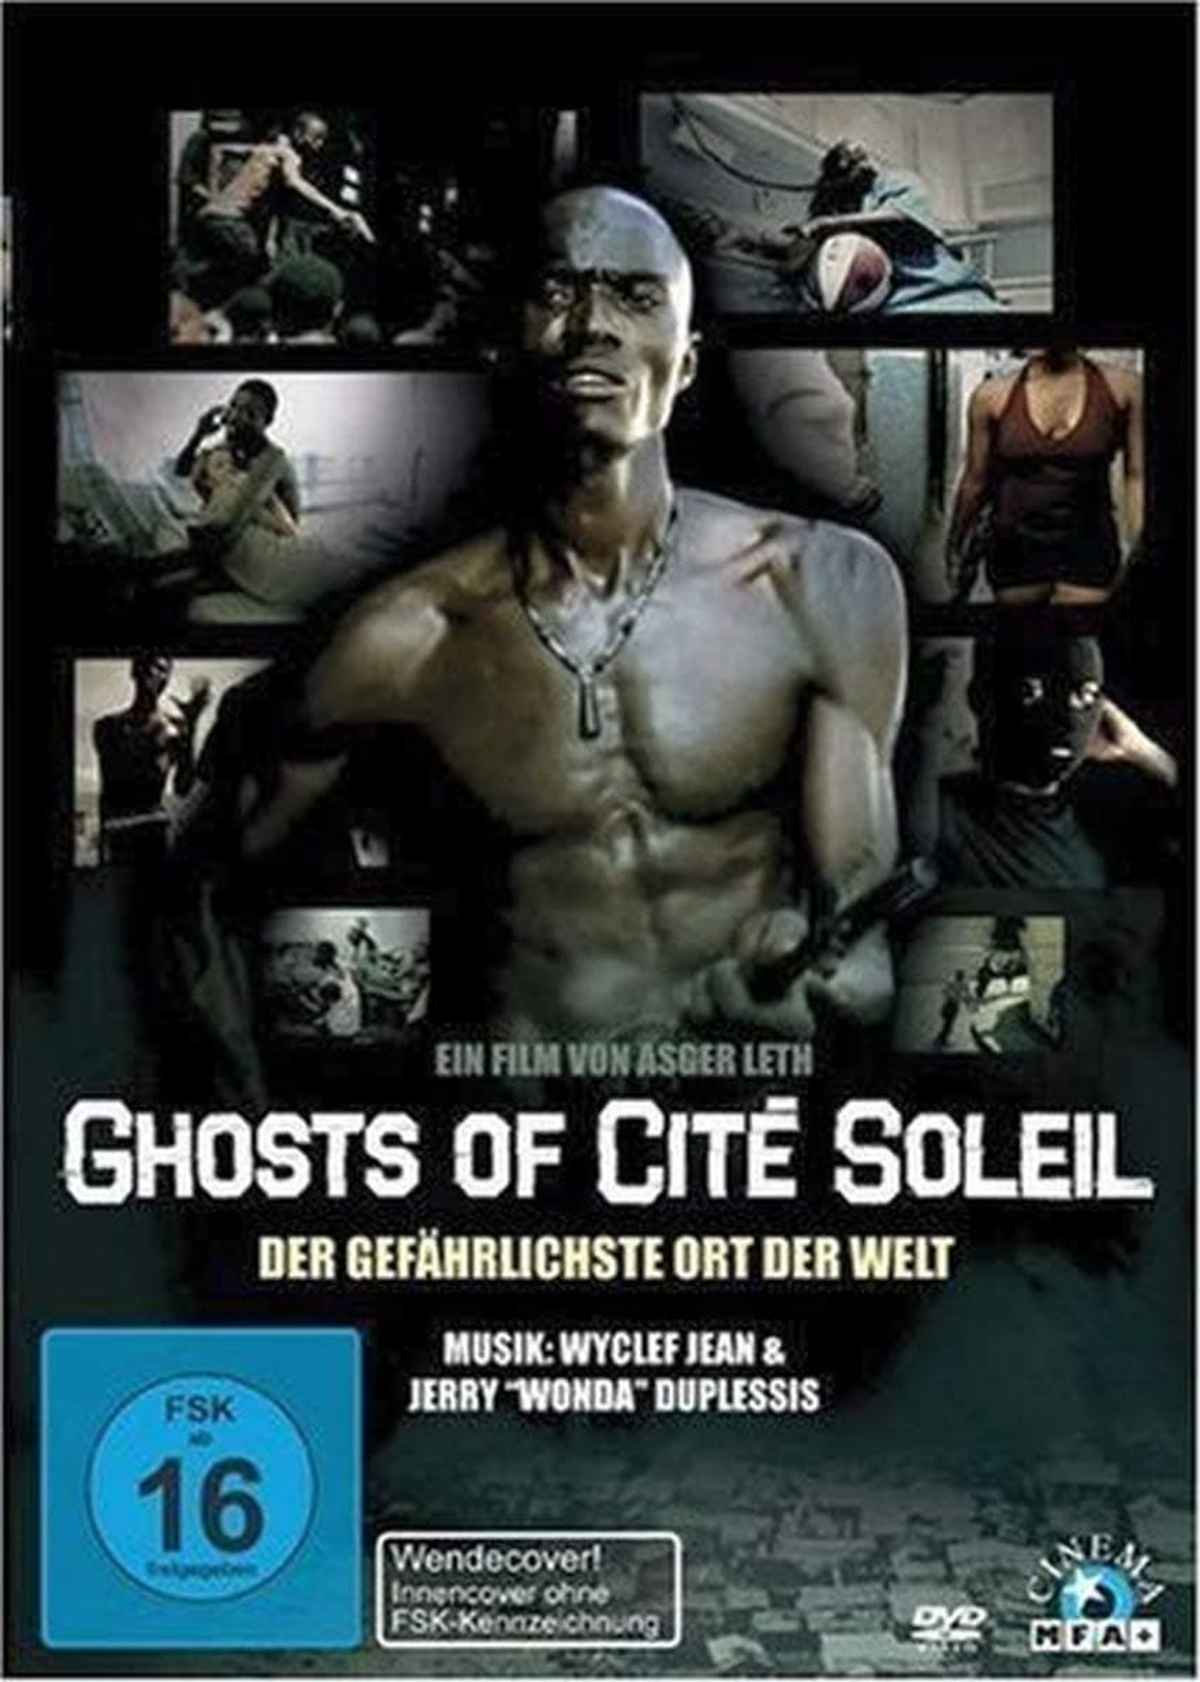 ghosts of cité soleil full movie